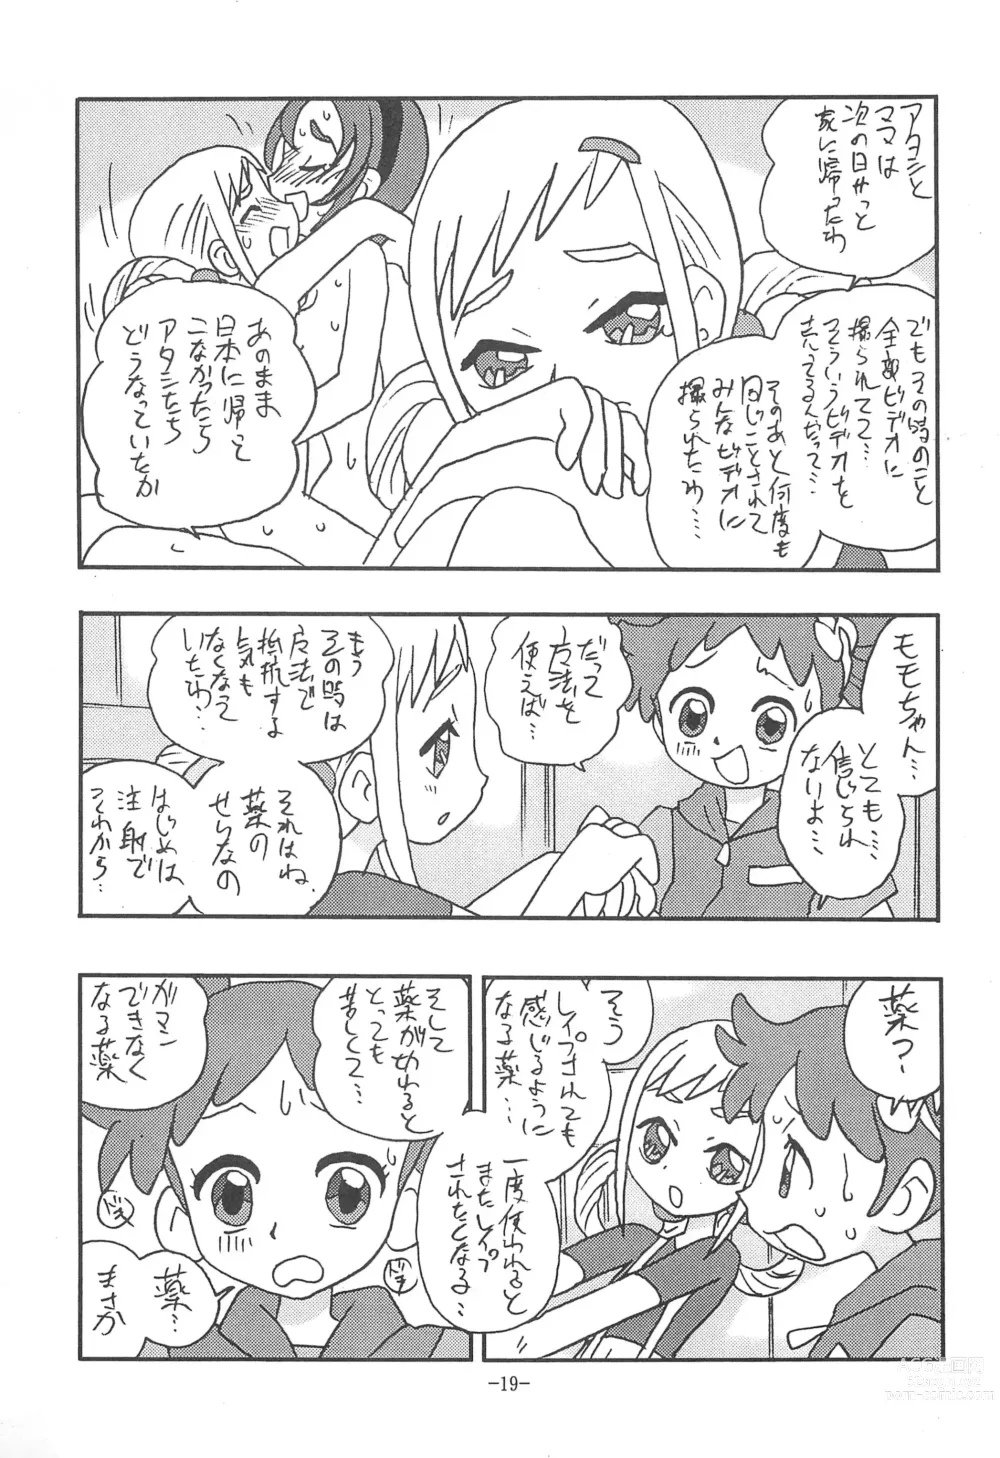 Page 19 of doujinshi CAN YOU KEEP A SECRET?